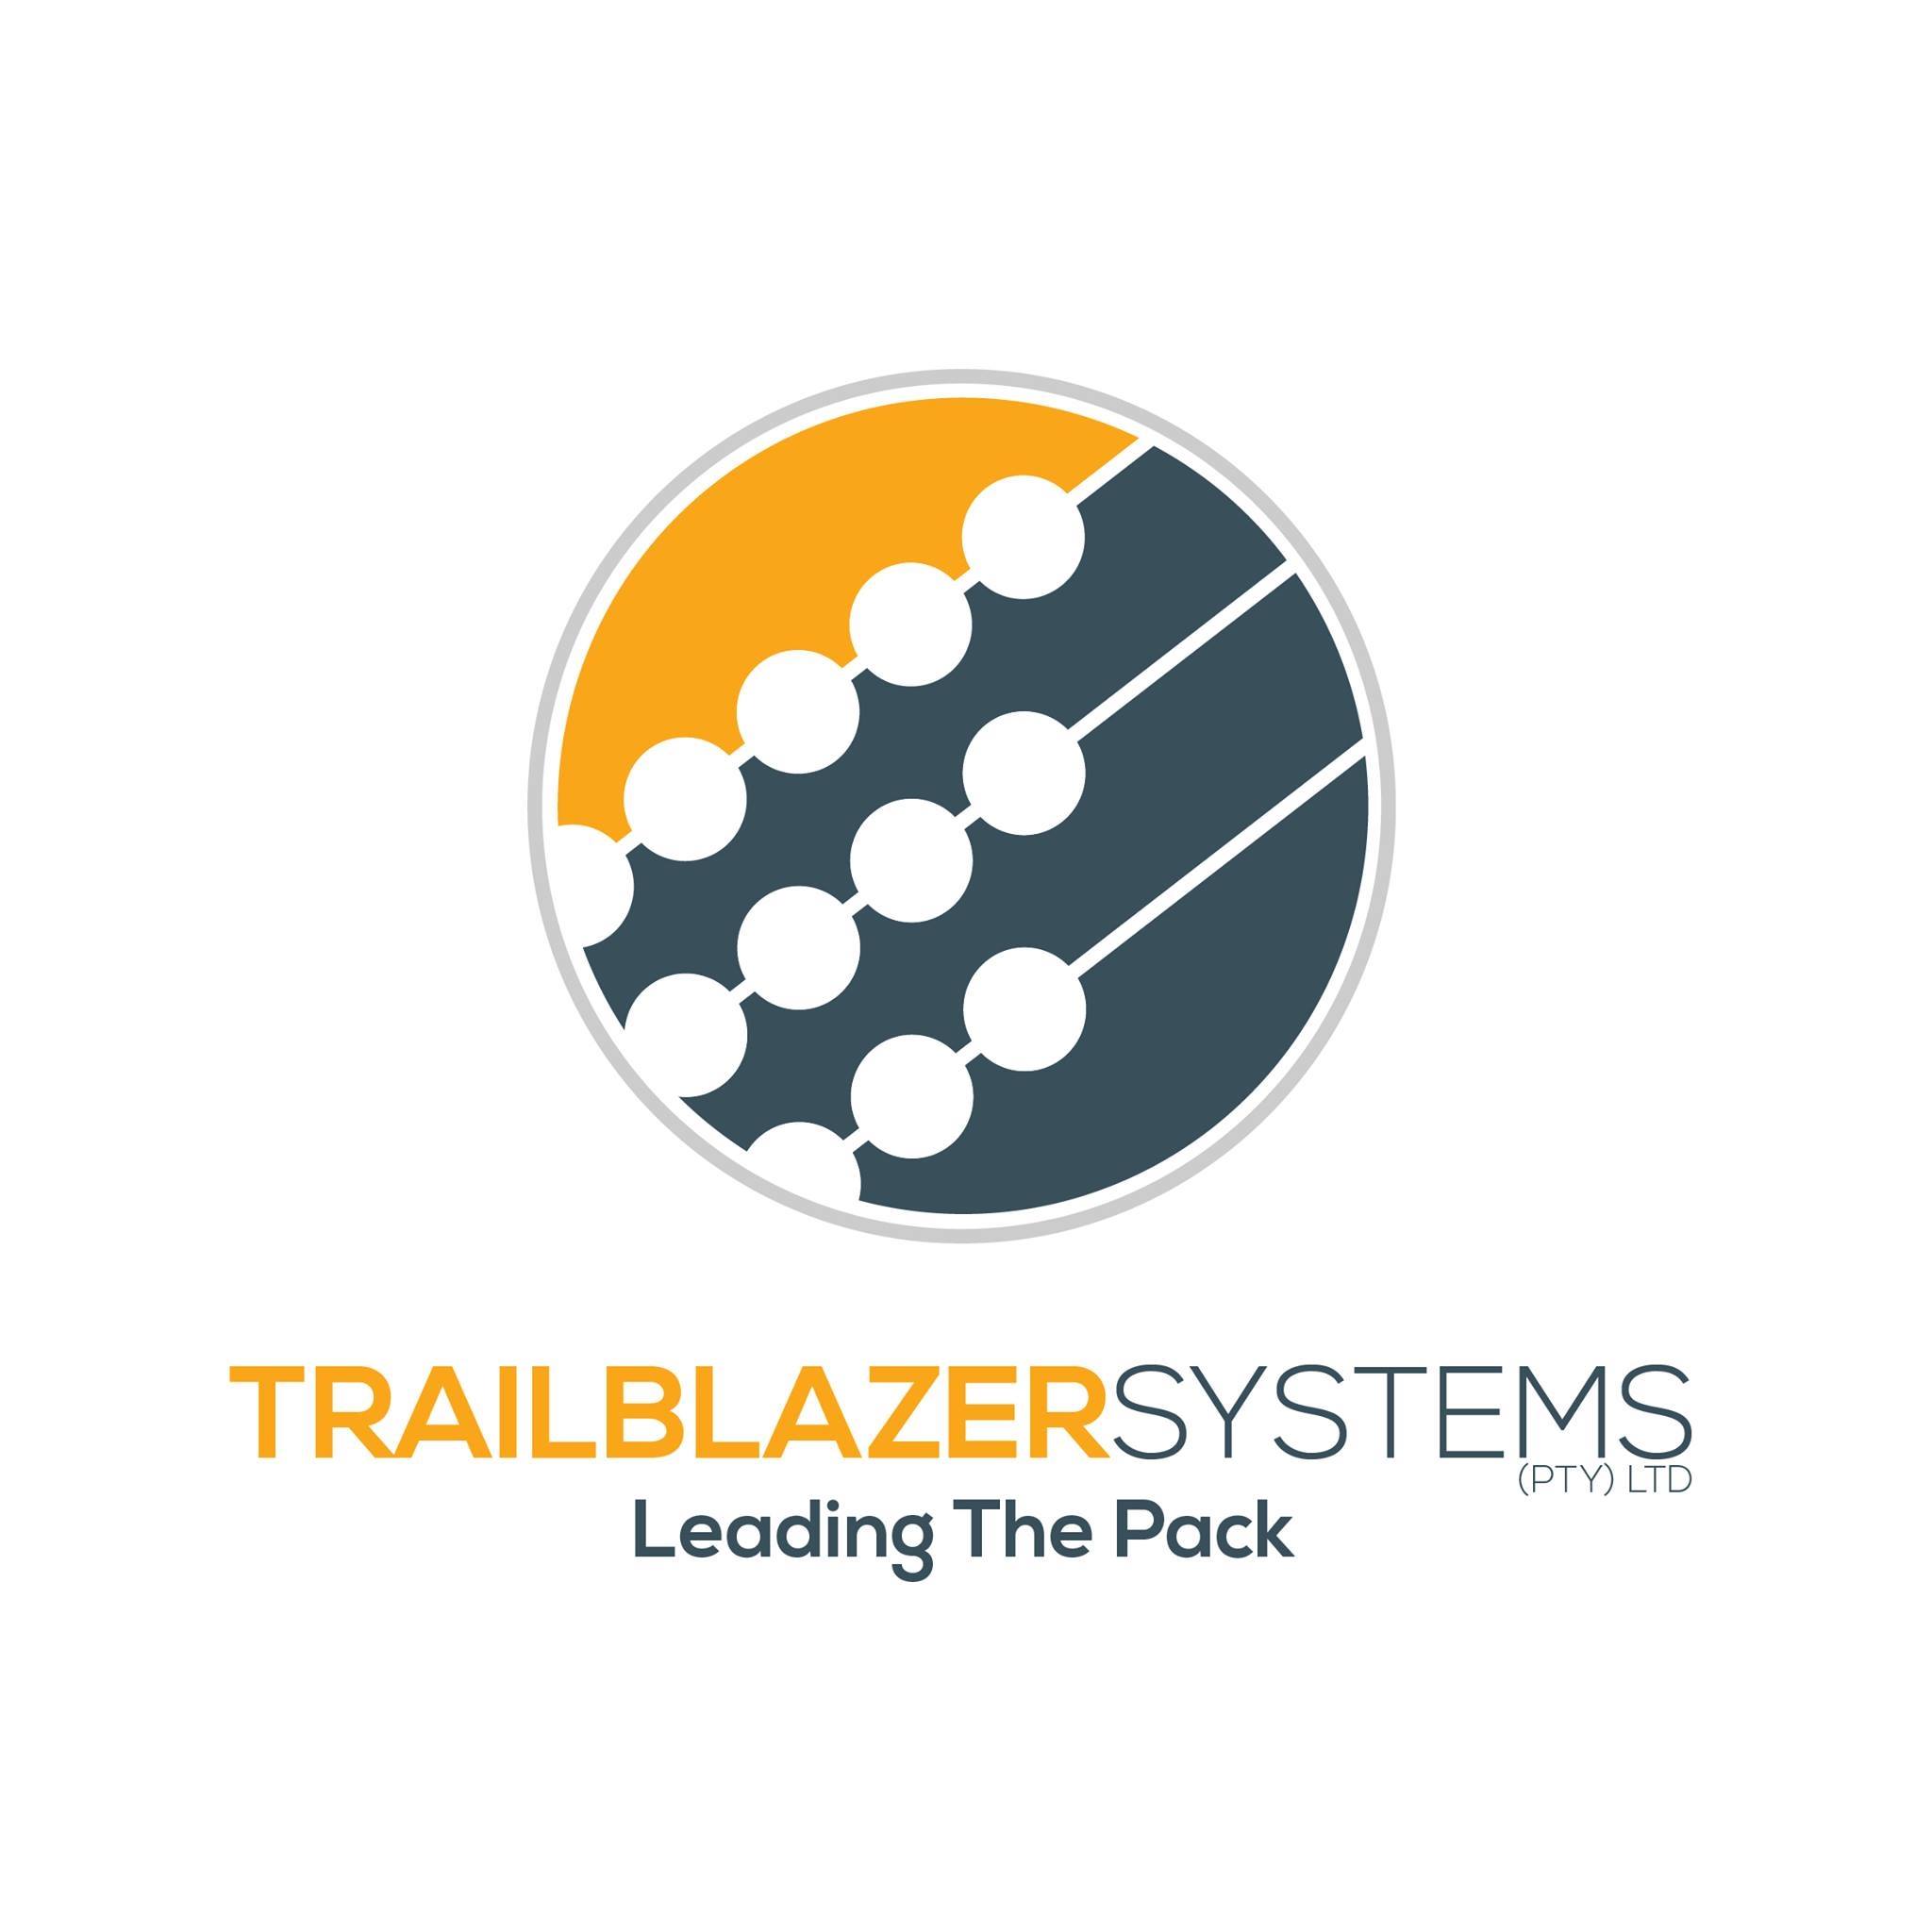 Trailblazer Systems Logo